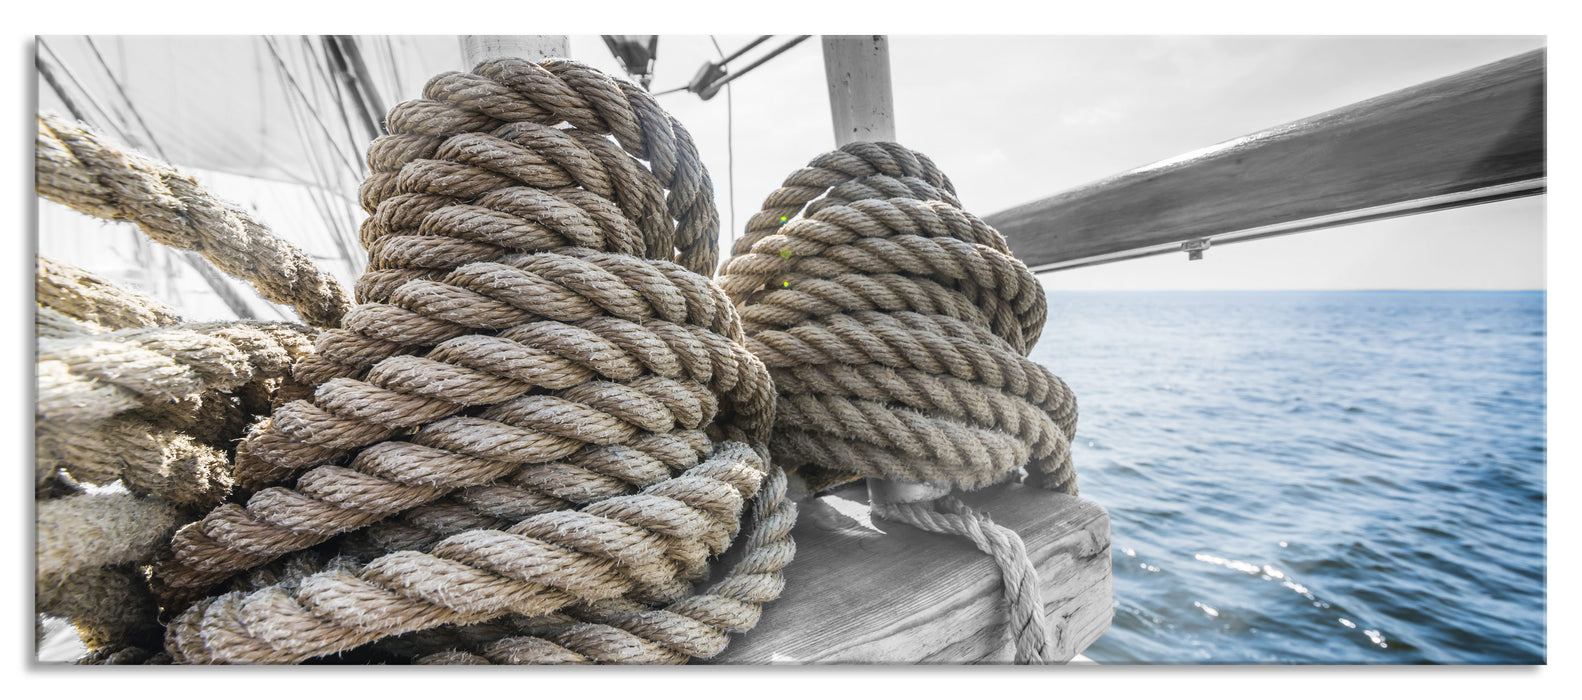 Tau Seile auf einem Schiff, Glasbild Panorama